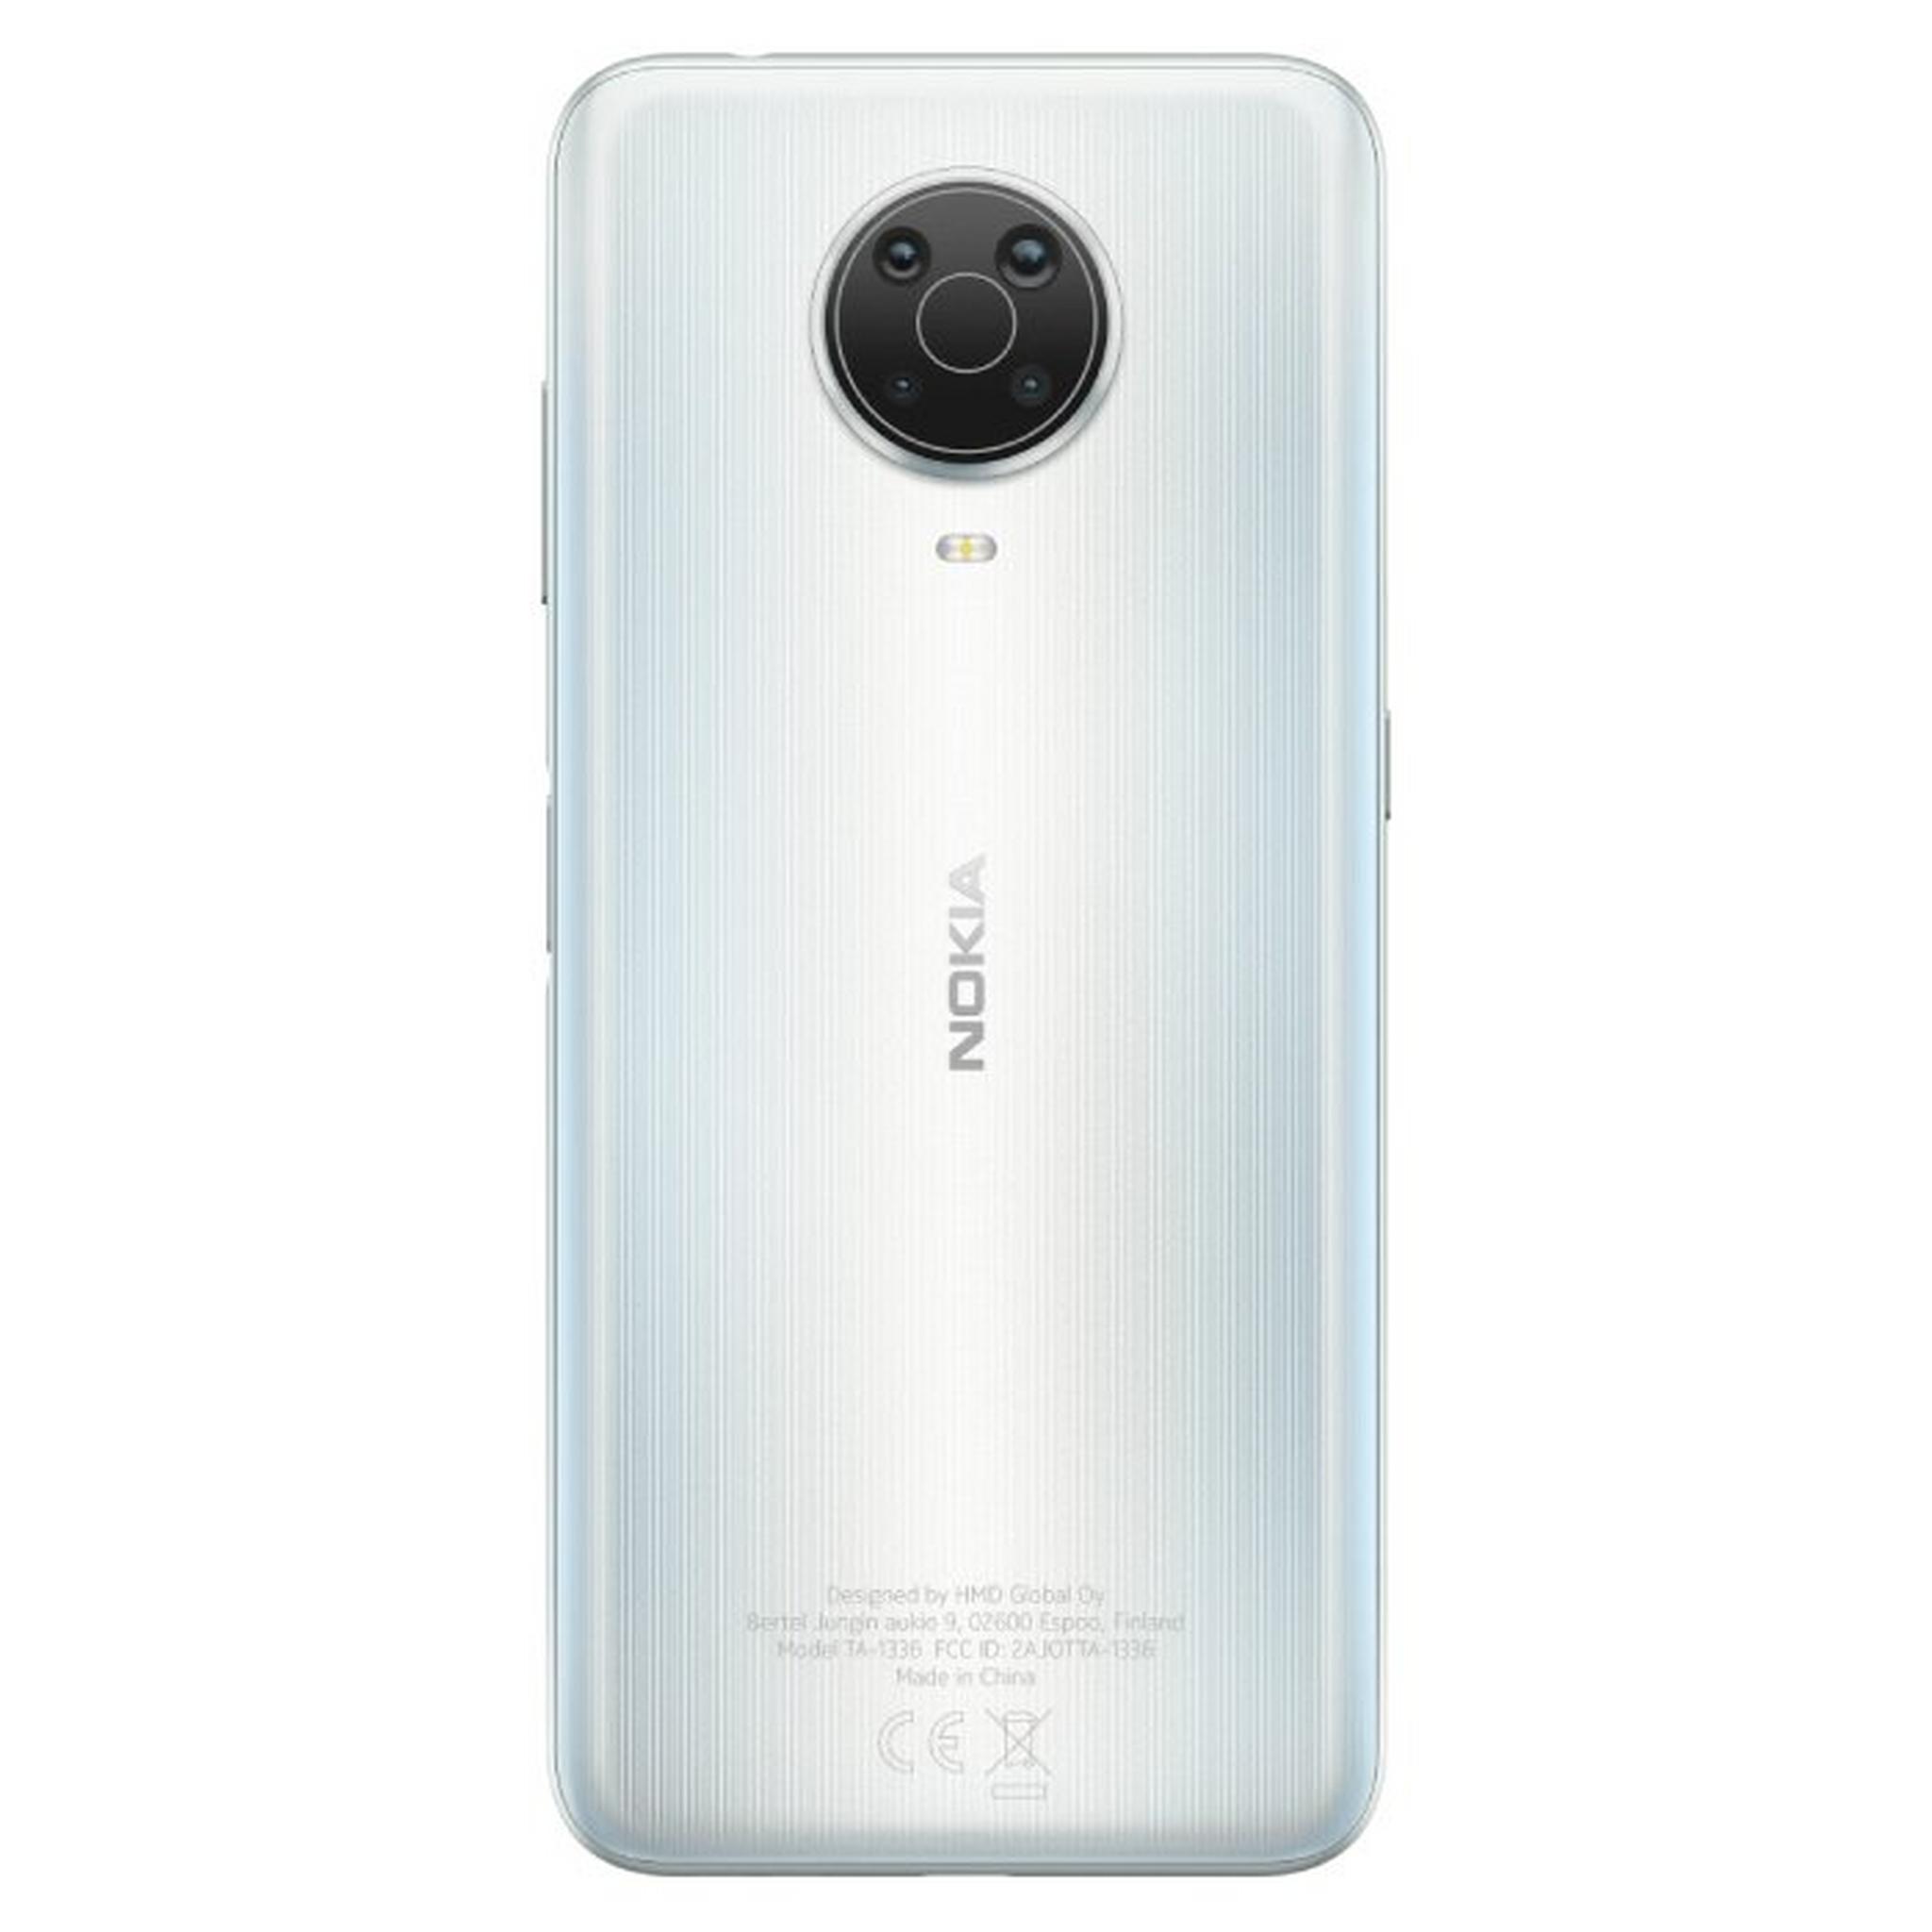 Nokia G20 128GB Dual Sim Phone - Glacier